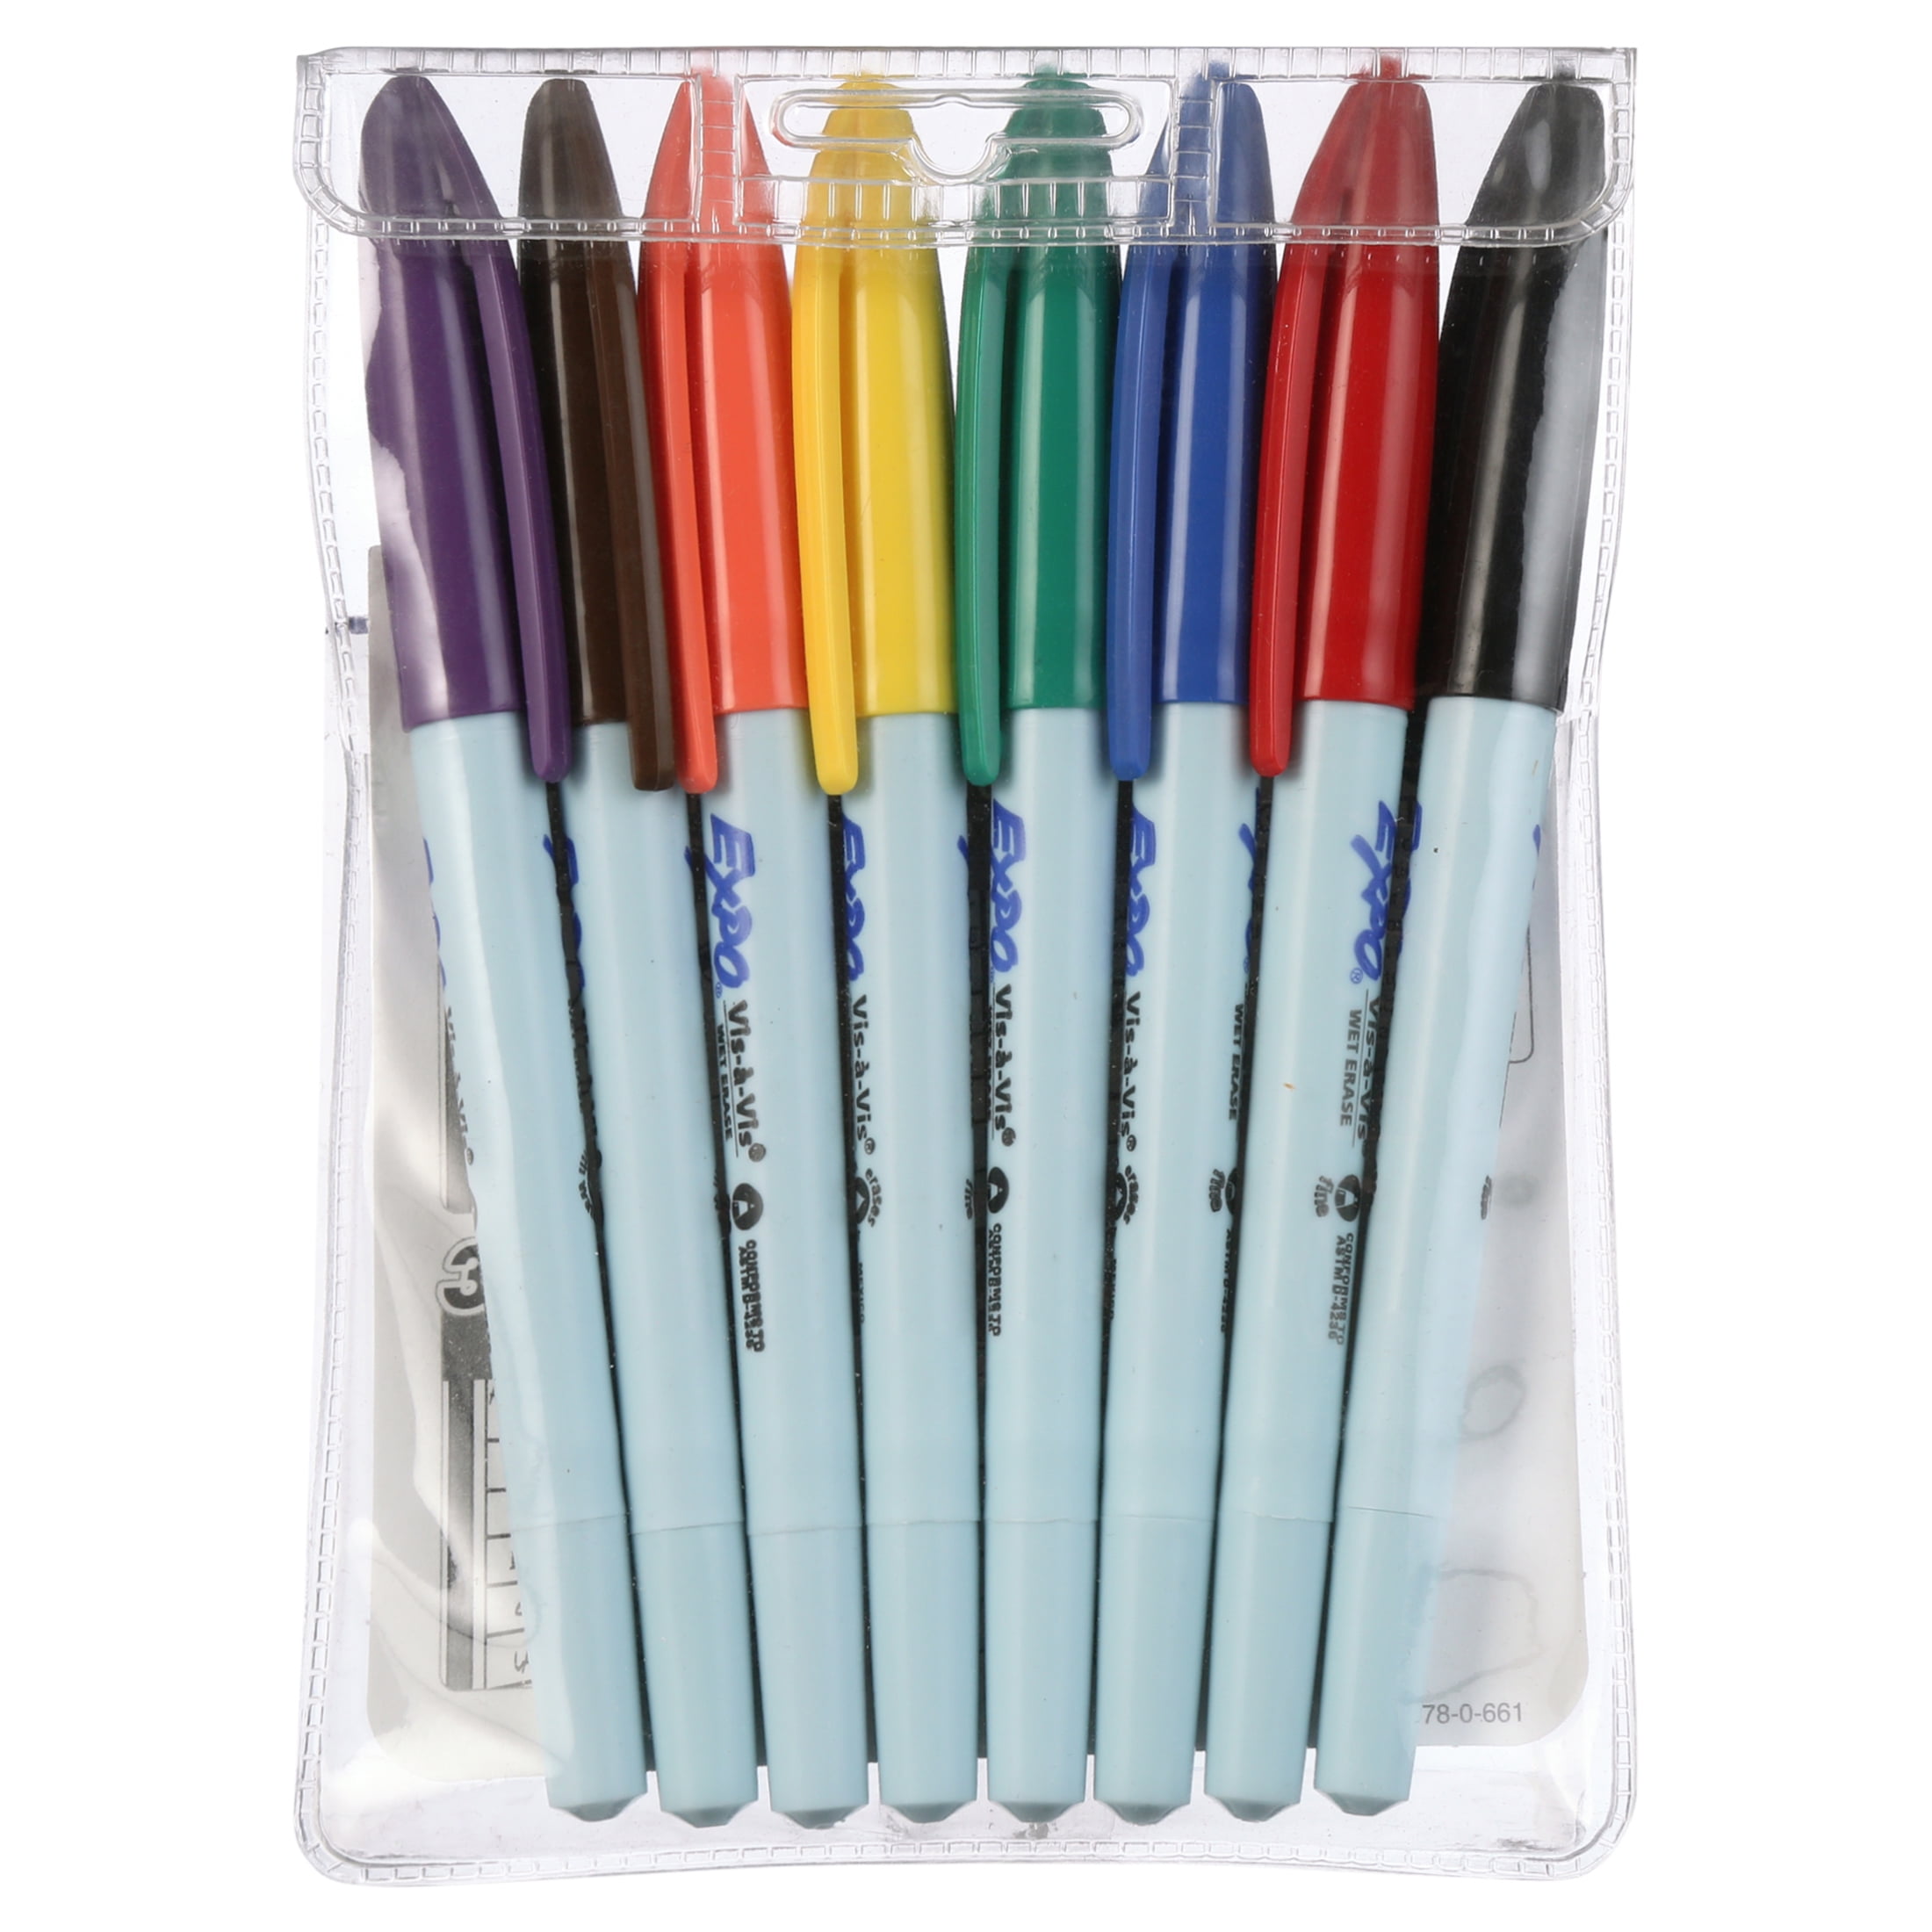 16 Count EXPO Vis-à-Vis Wet Erase Markers, Fine Point, Assorted Colors New